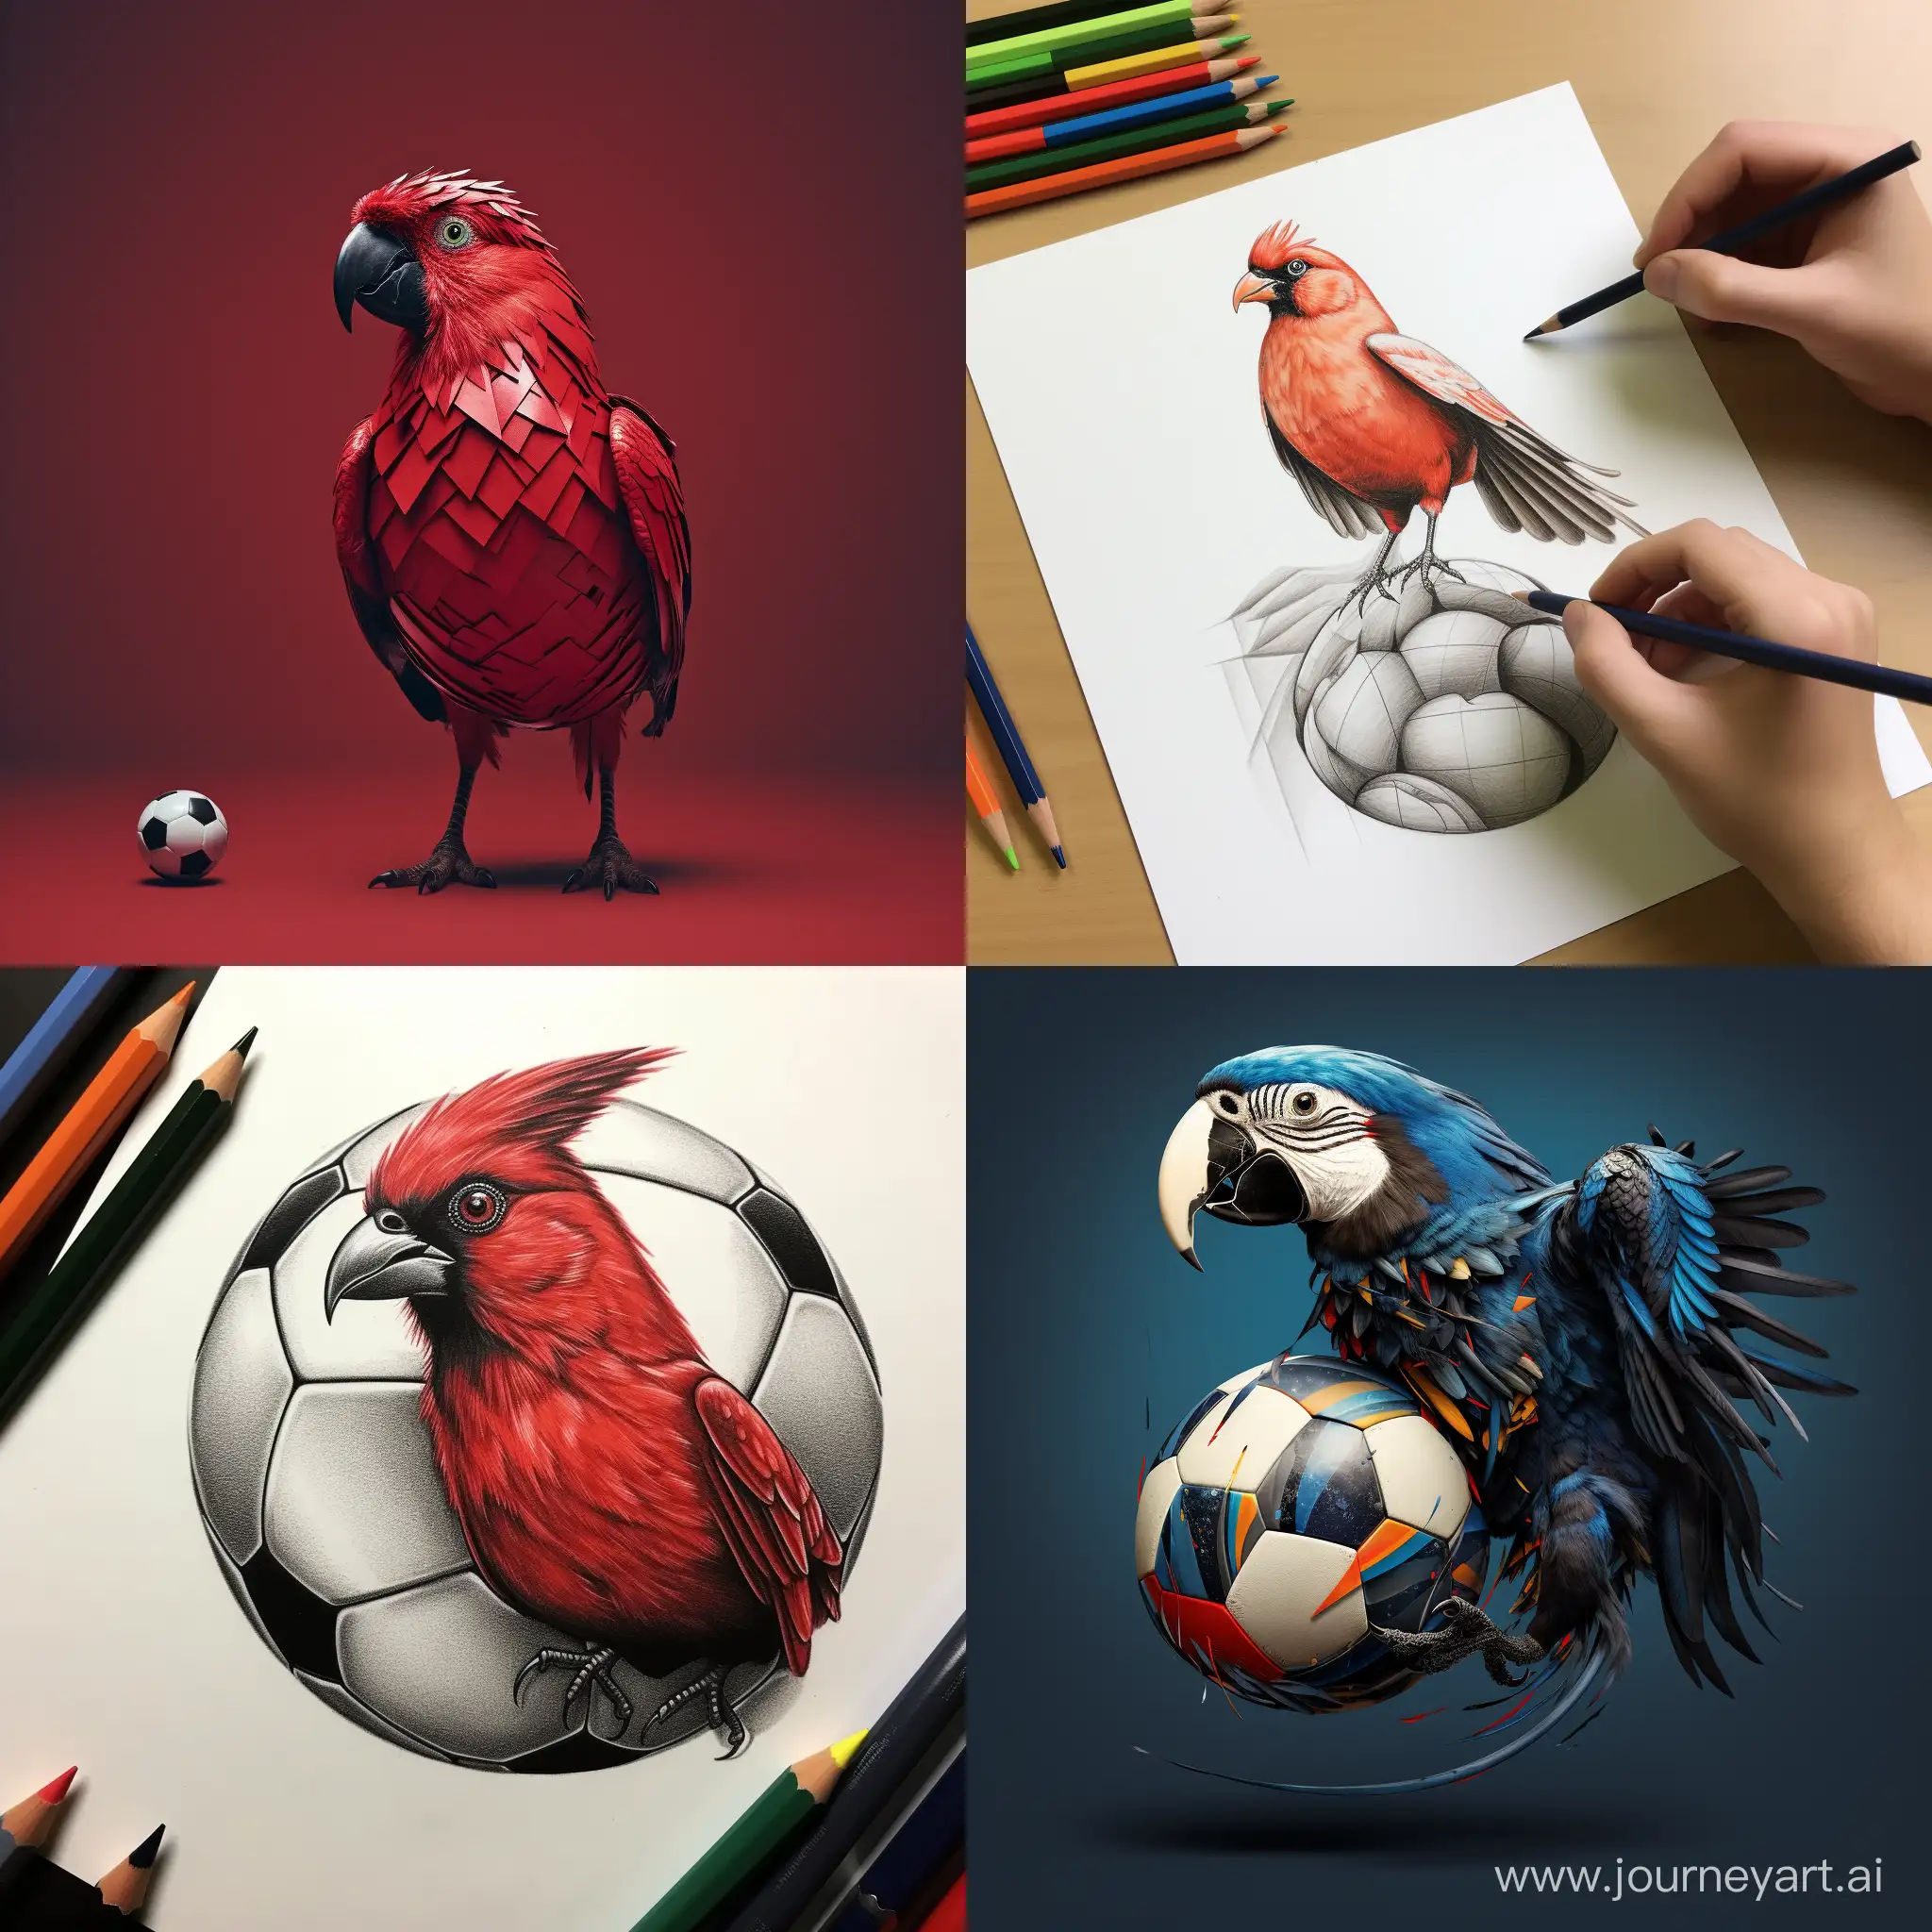 Make the bird into the shape of a football